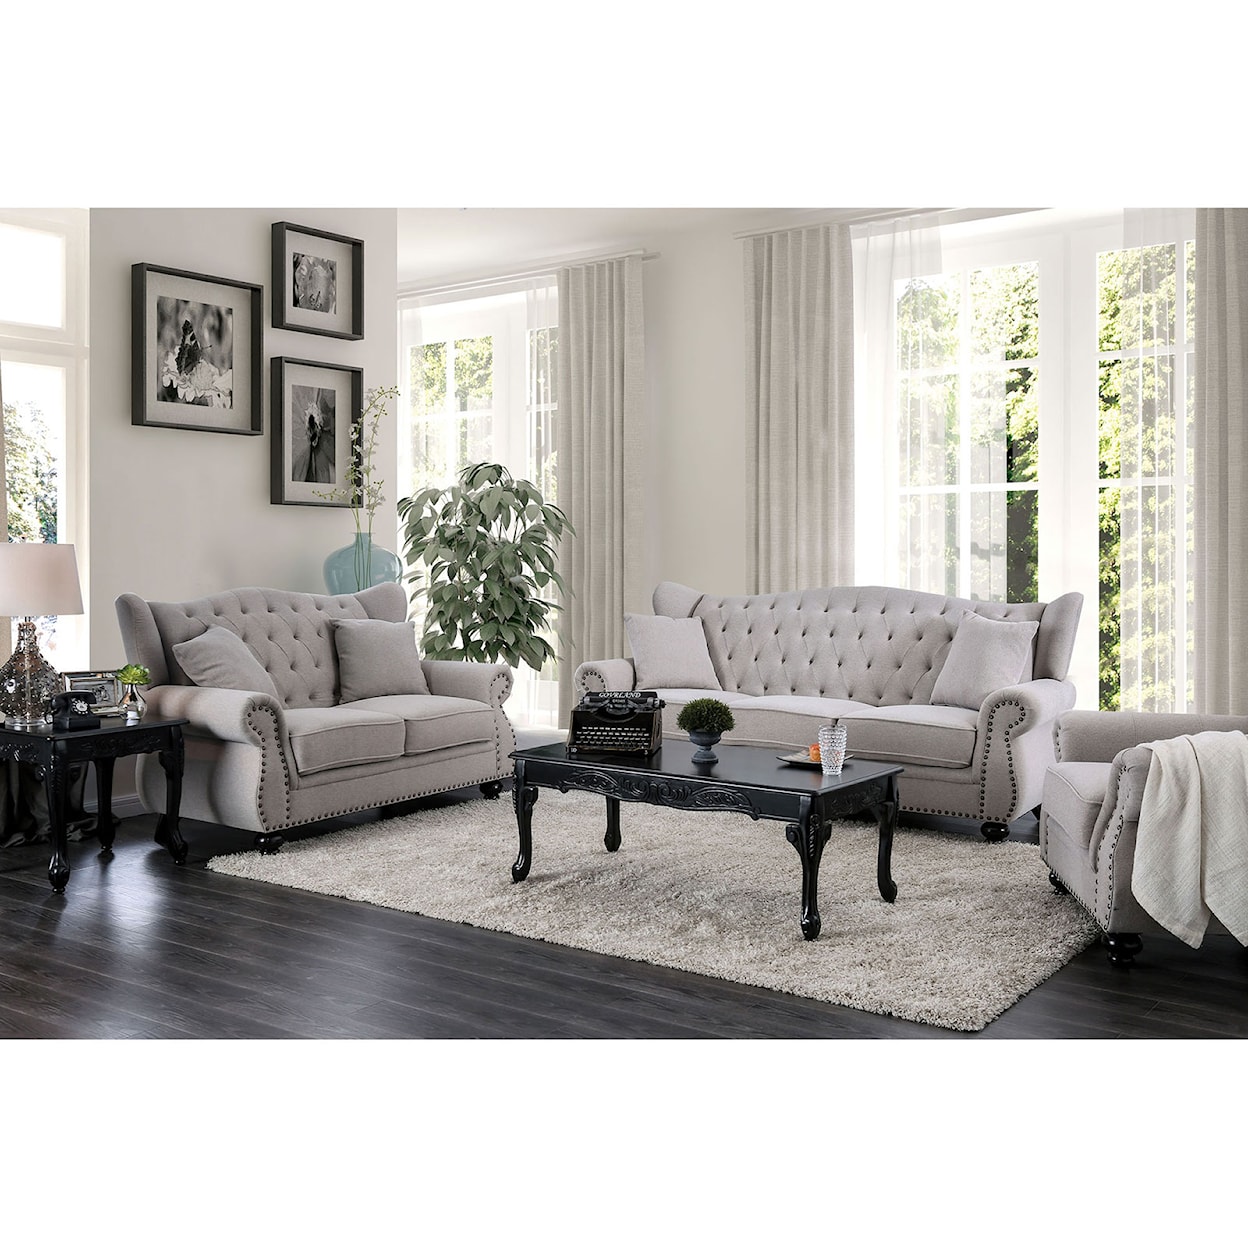 Furniture of America Ewloe Sofa and Loveseat Set 